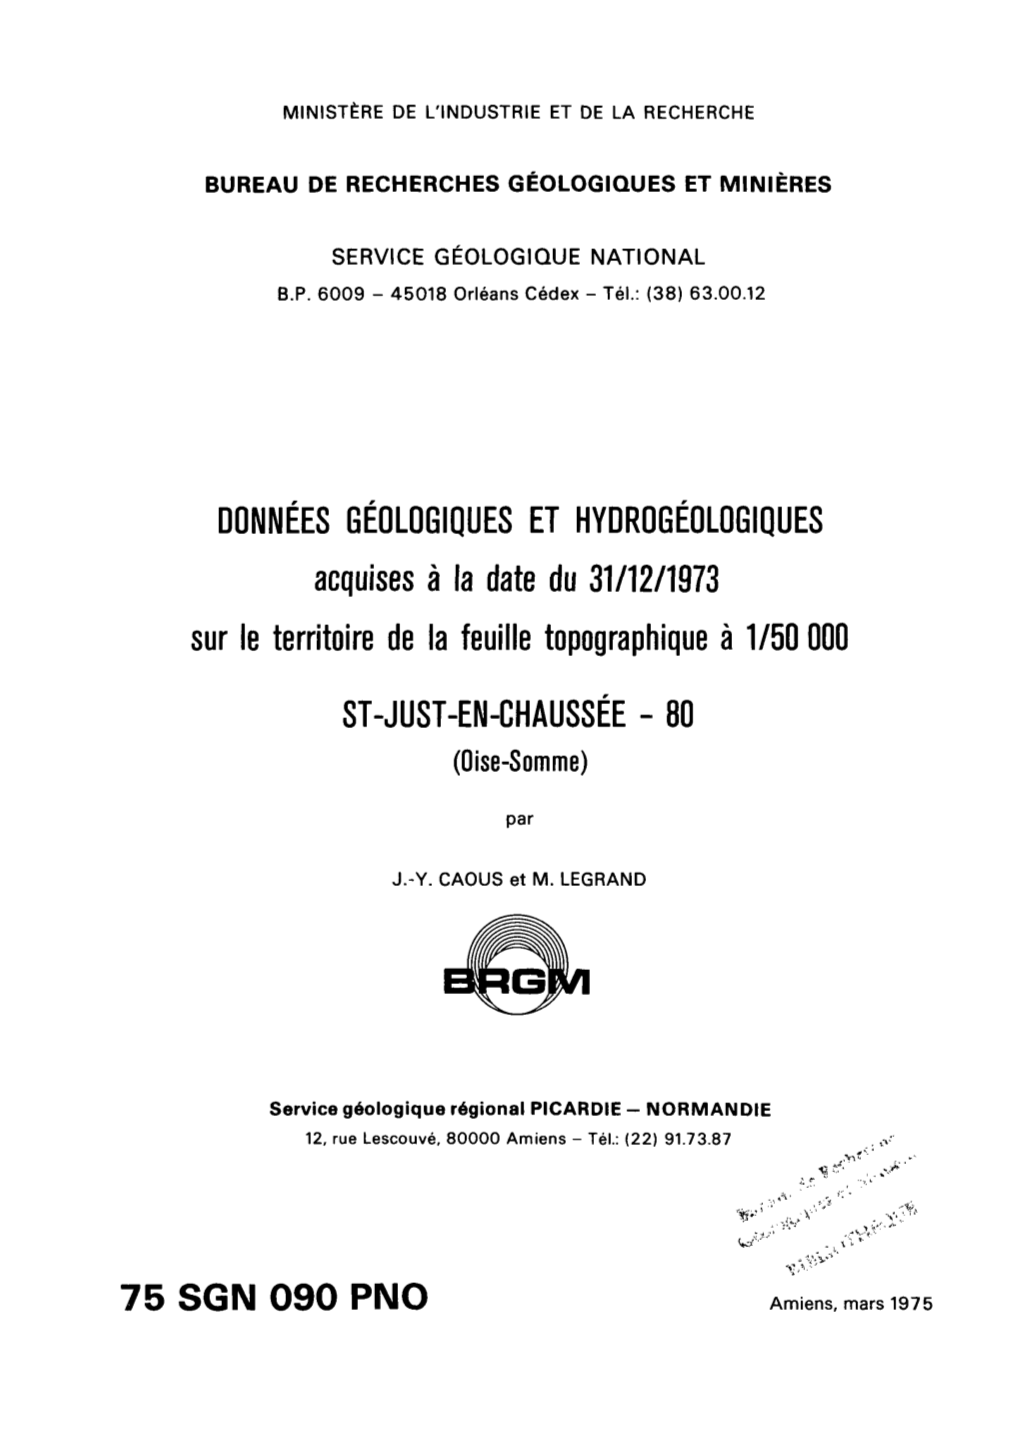 75 SGN 090 PNO Amiens, Mars 1975 RESUME